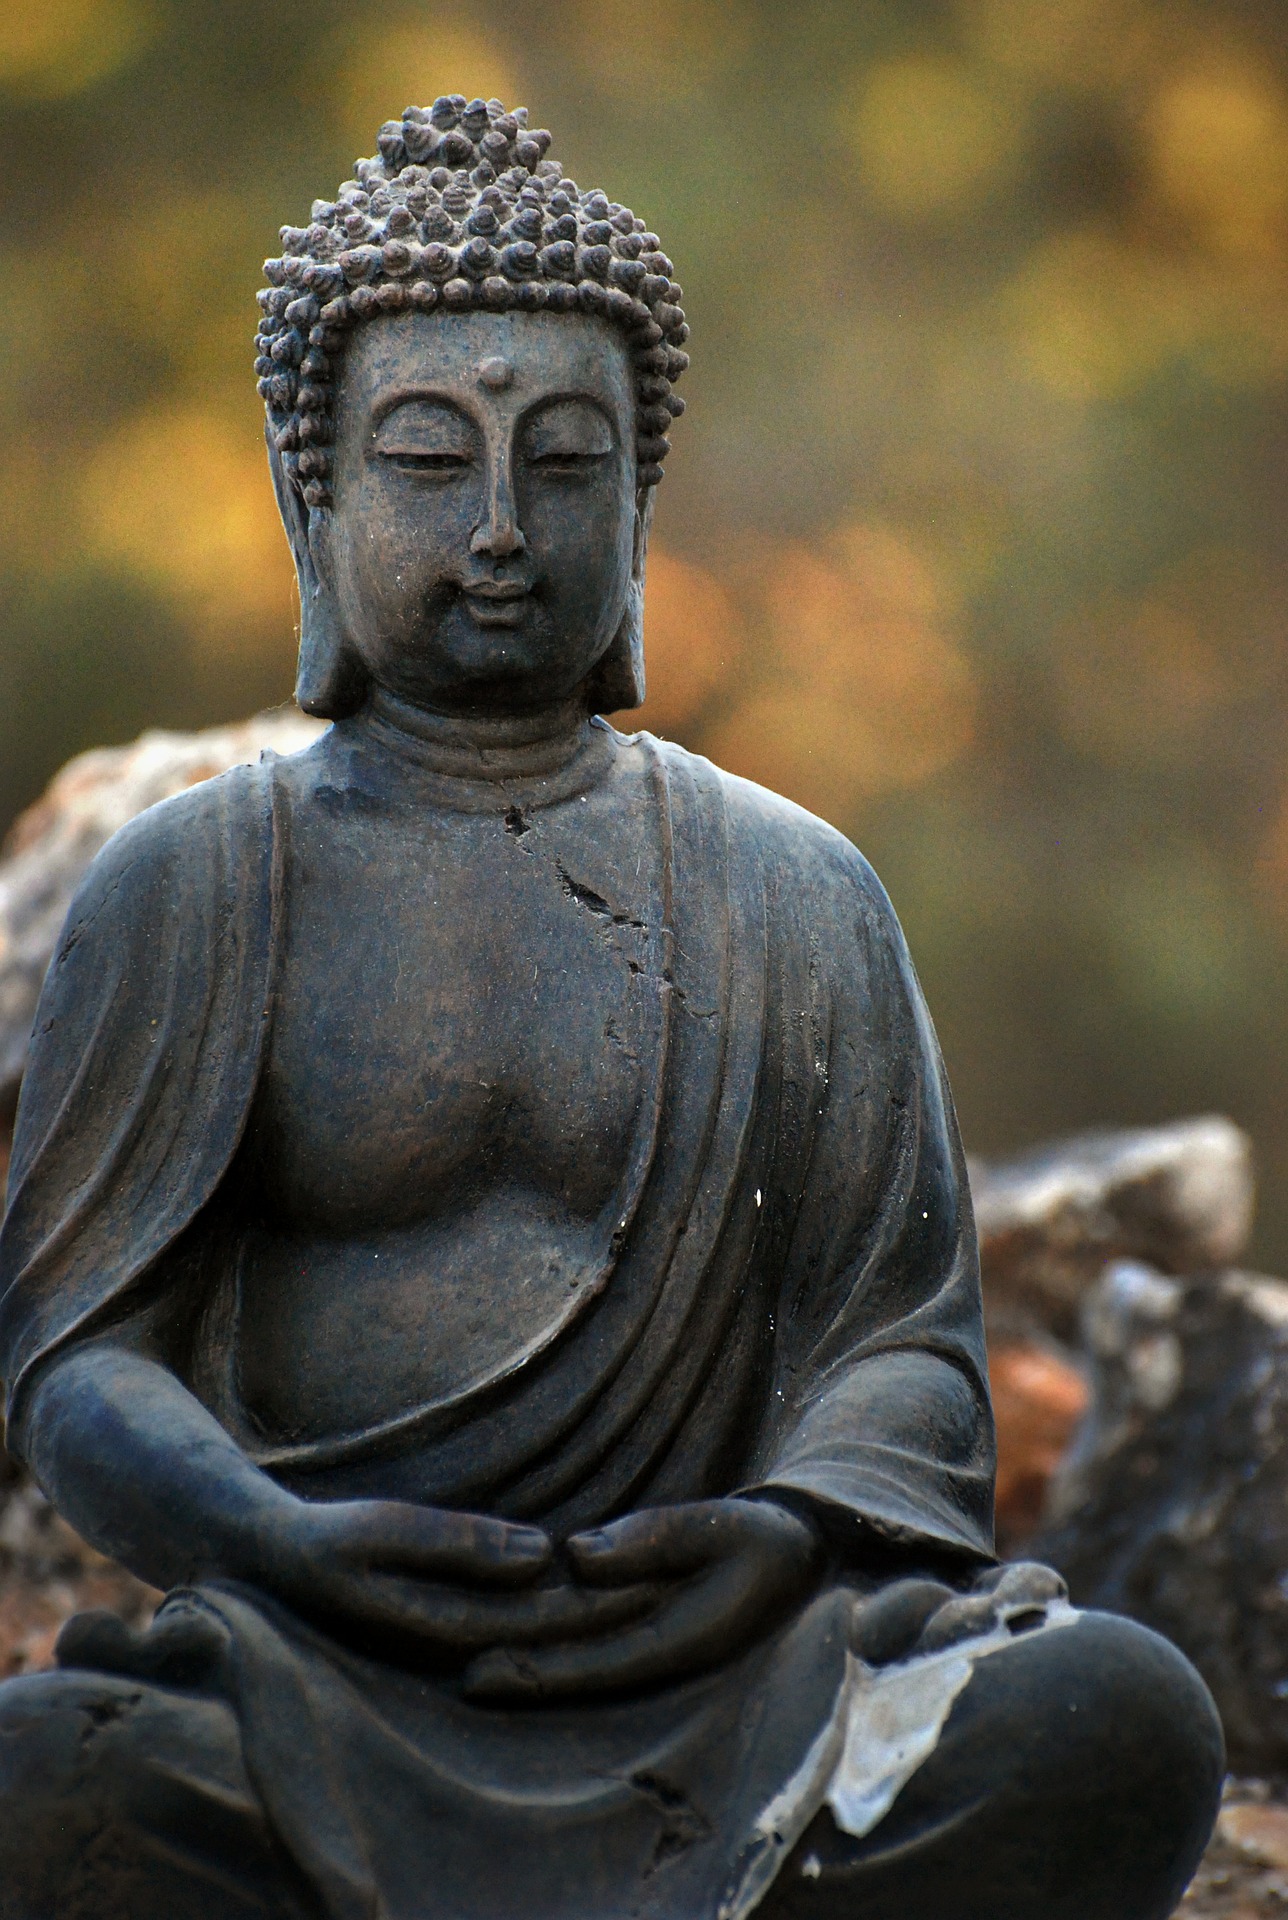 bouddha-434529_1920_accroche coeur 41100 aze loir et cher meditation calme repos serenite main tete pied